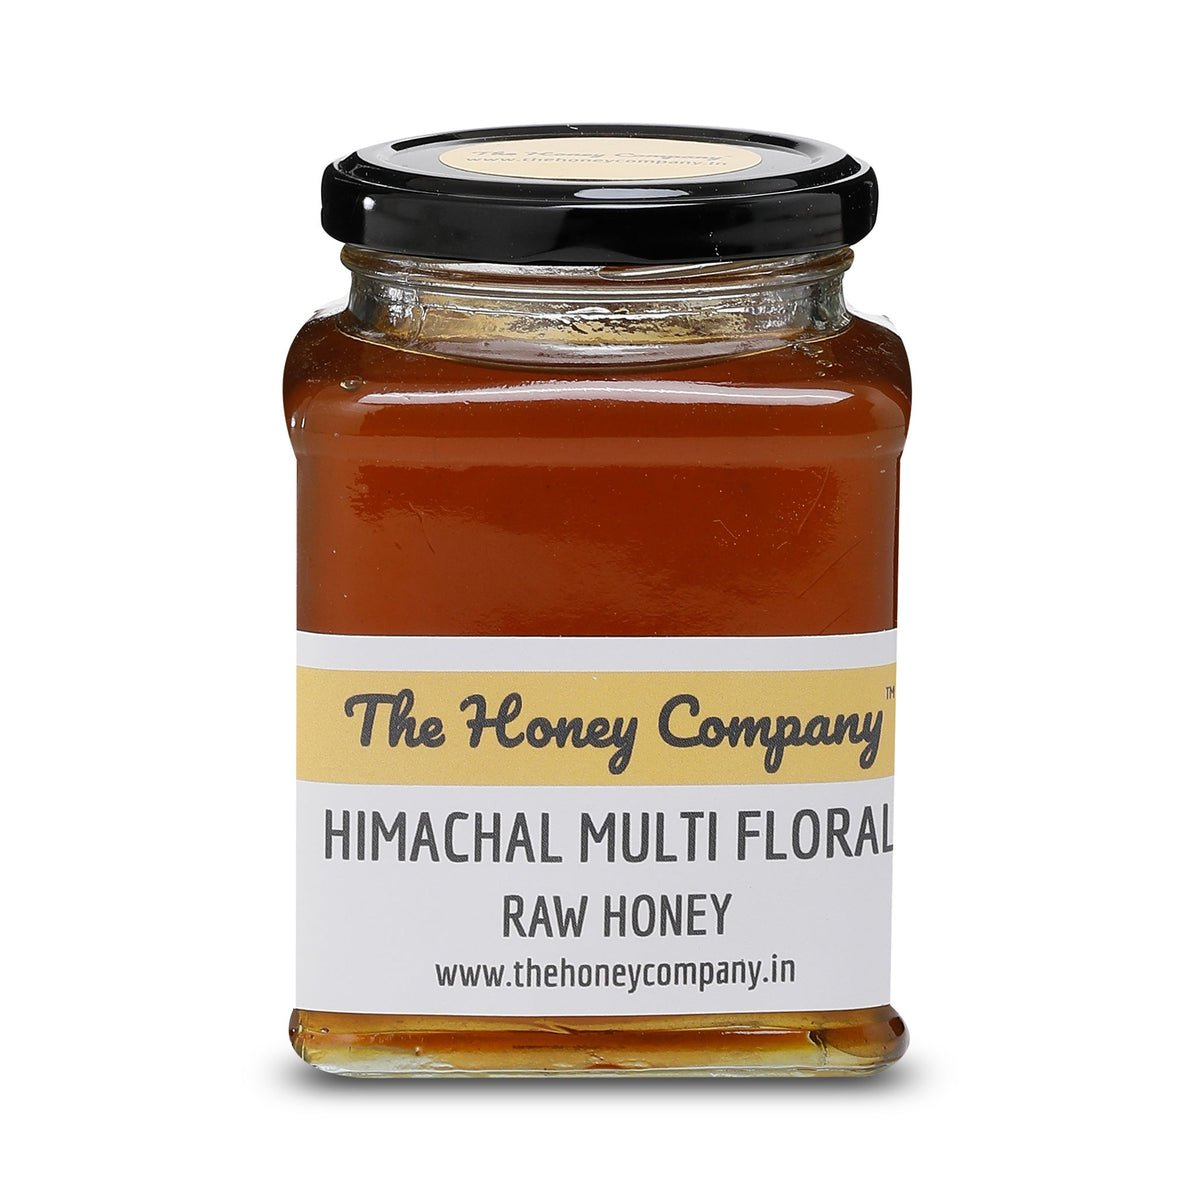 Himachal Multi Floral Raw Honey - 550g